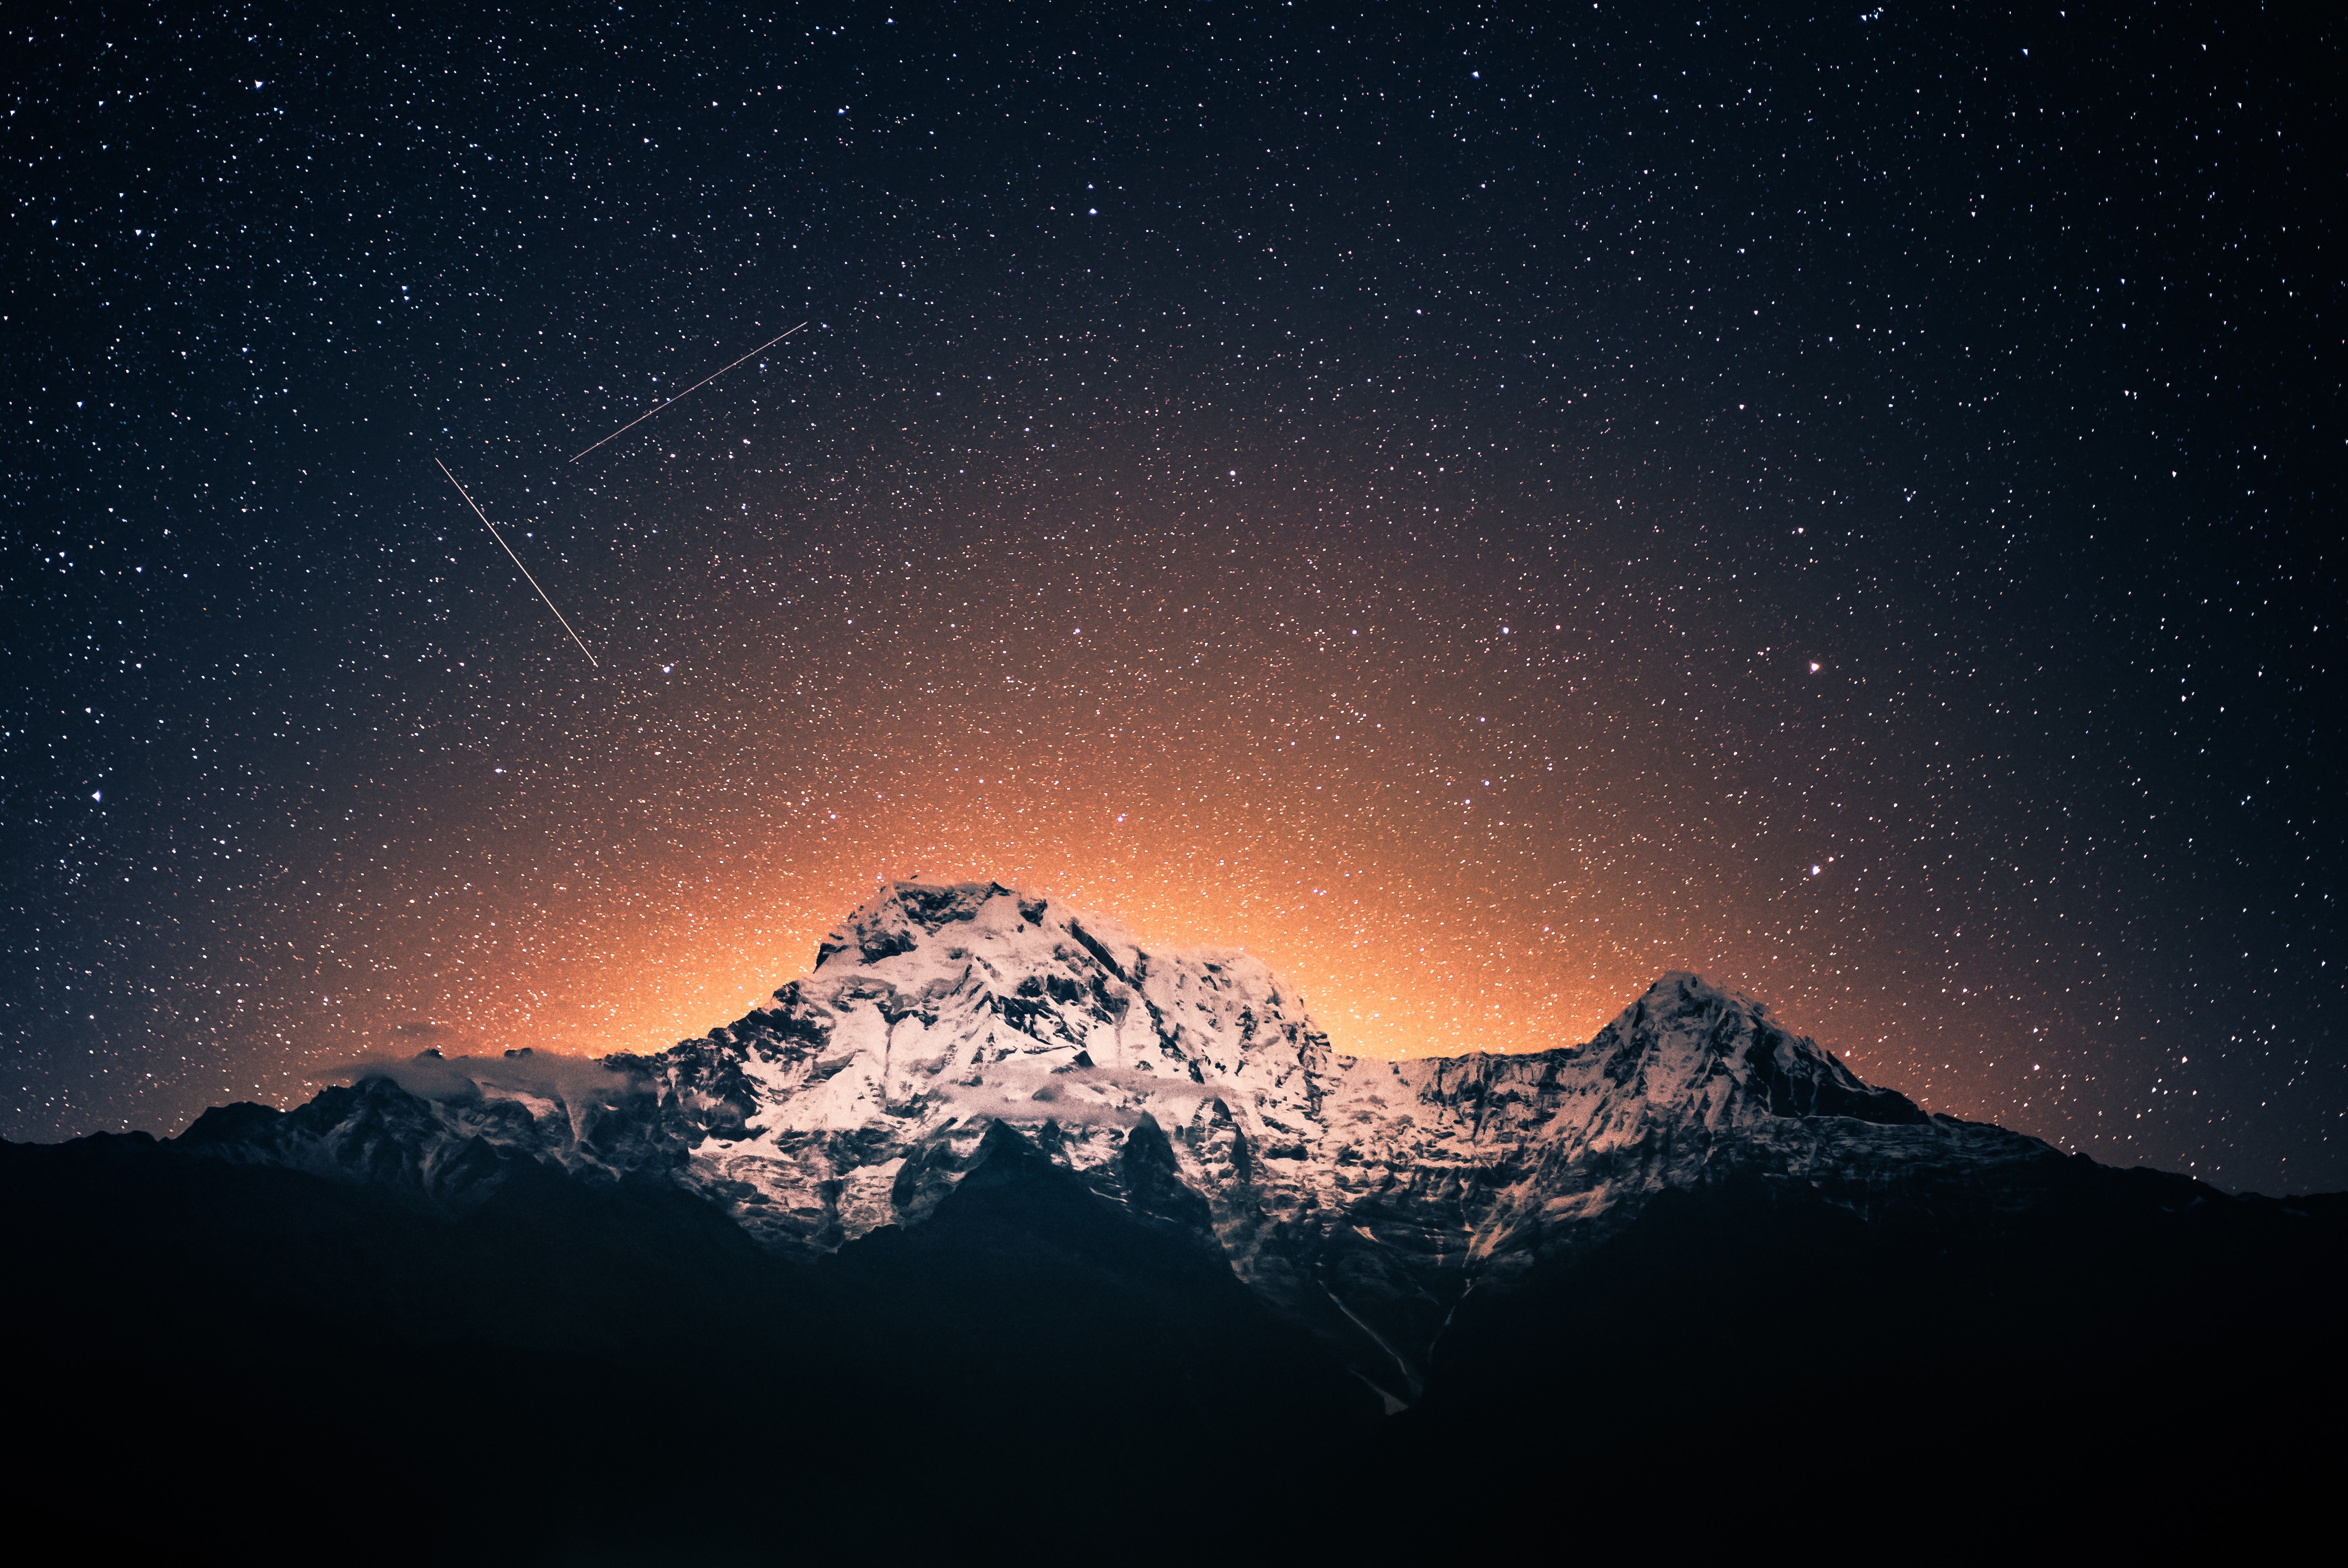 Ghandruk Nepal Night Sky Night Sky Landscape Outdoors Stars Space Mountain Top Comet Orange Dusk Rid 4240x2832